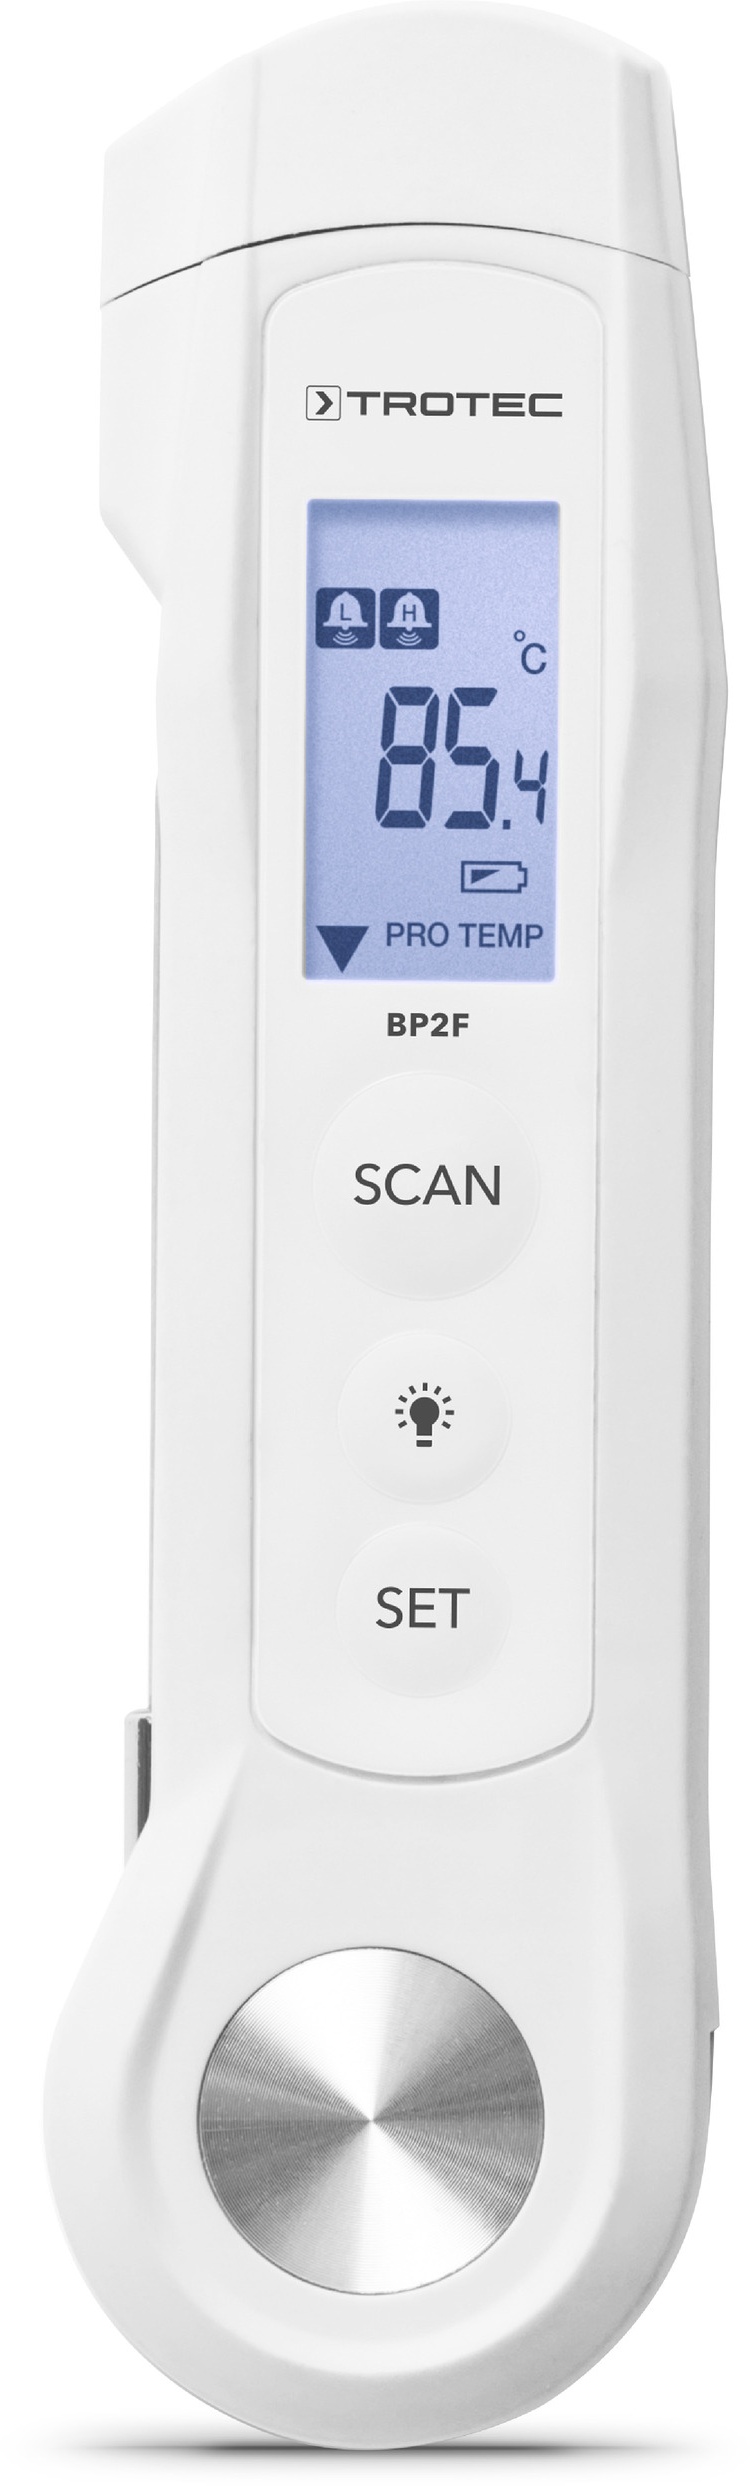 Trotec Levensmiddelen thermometer BP2F